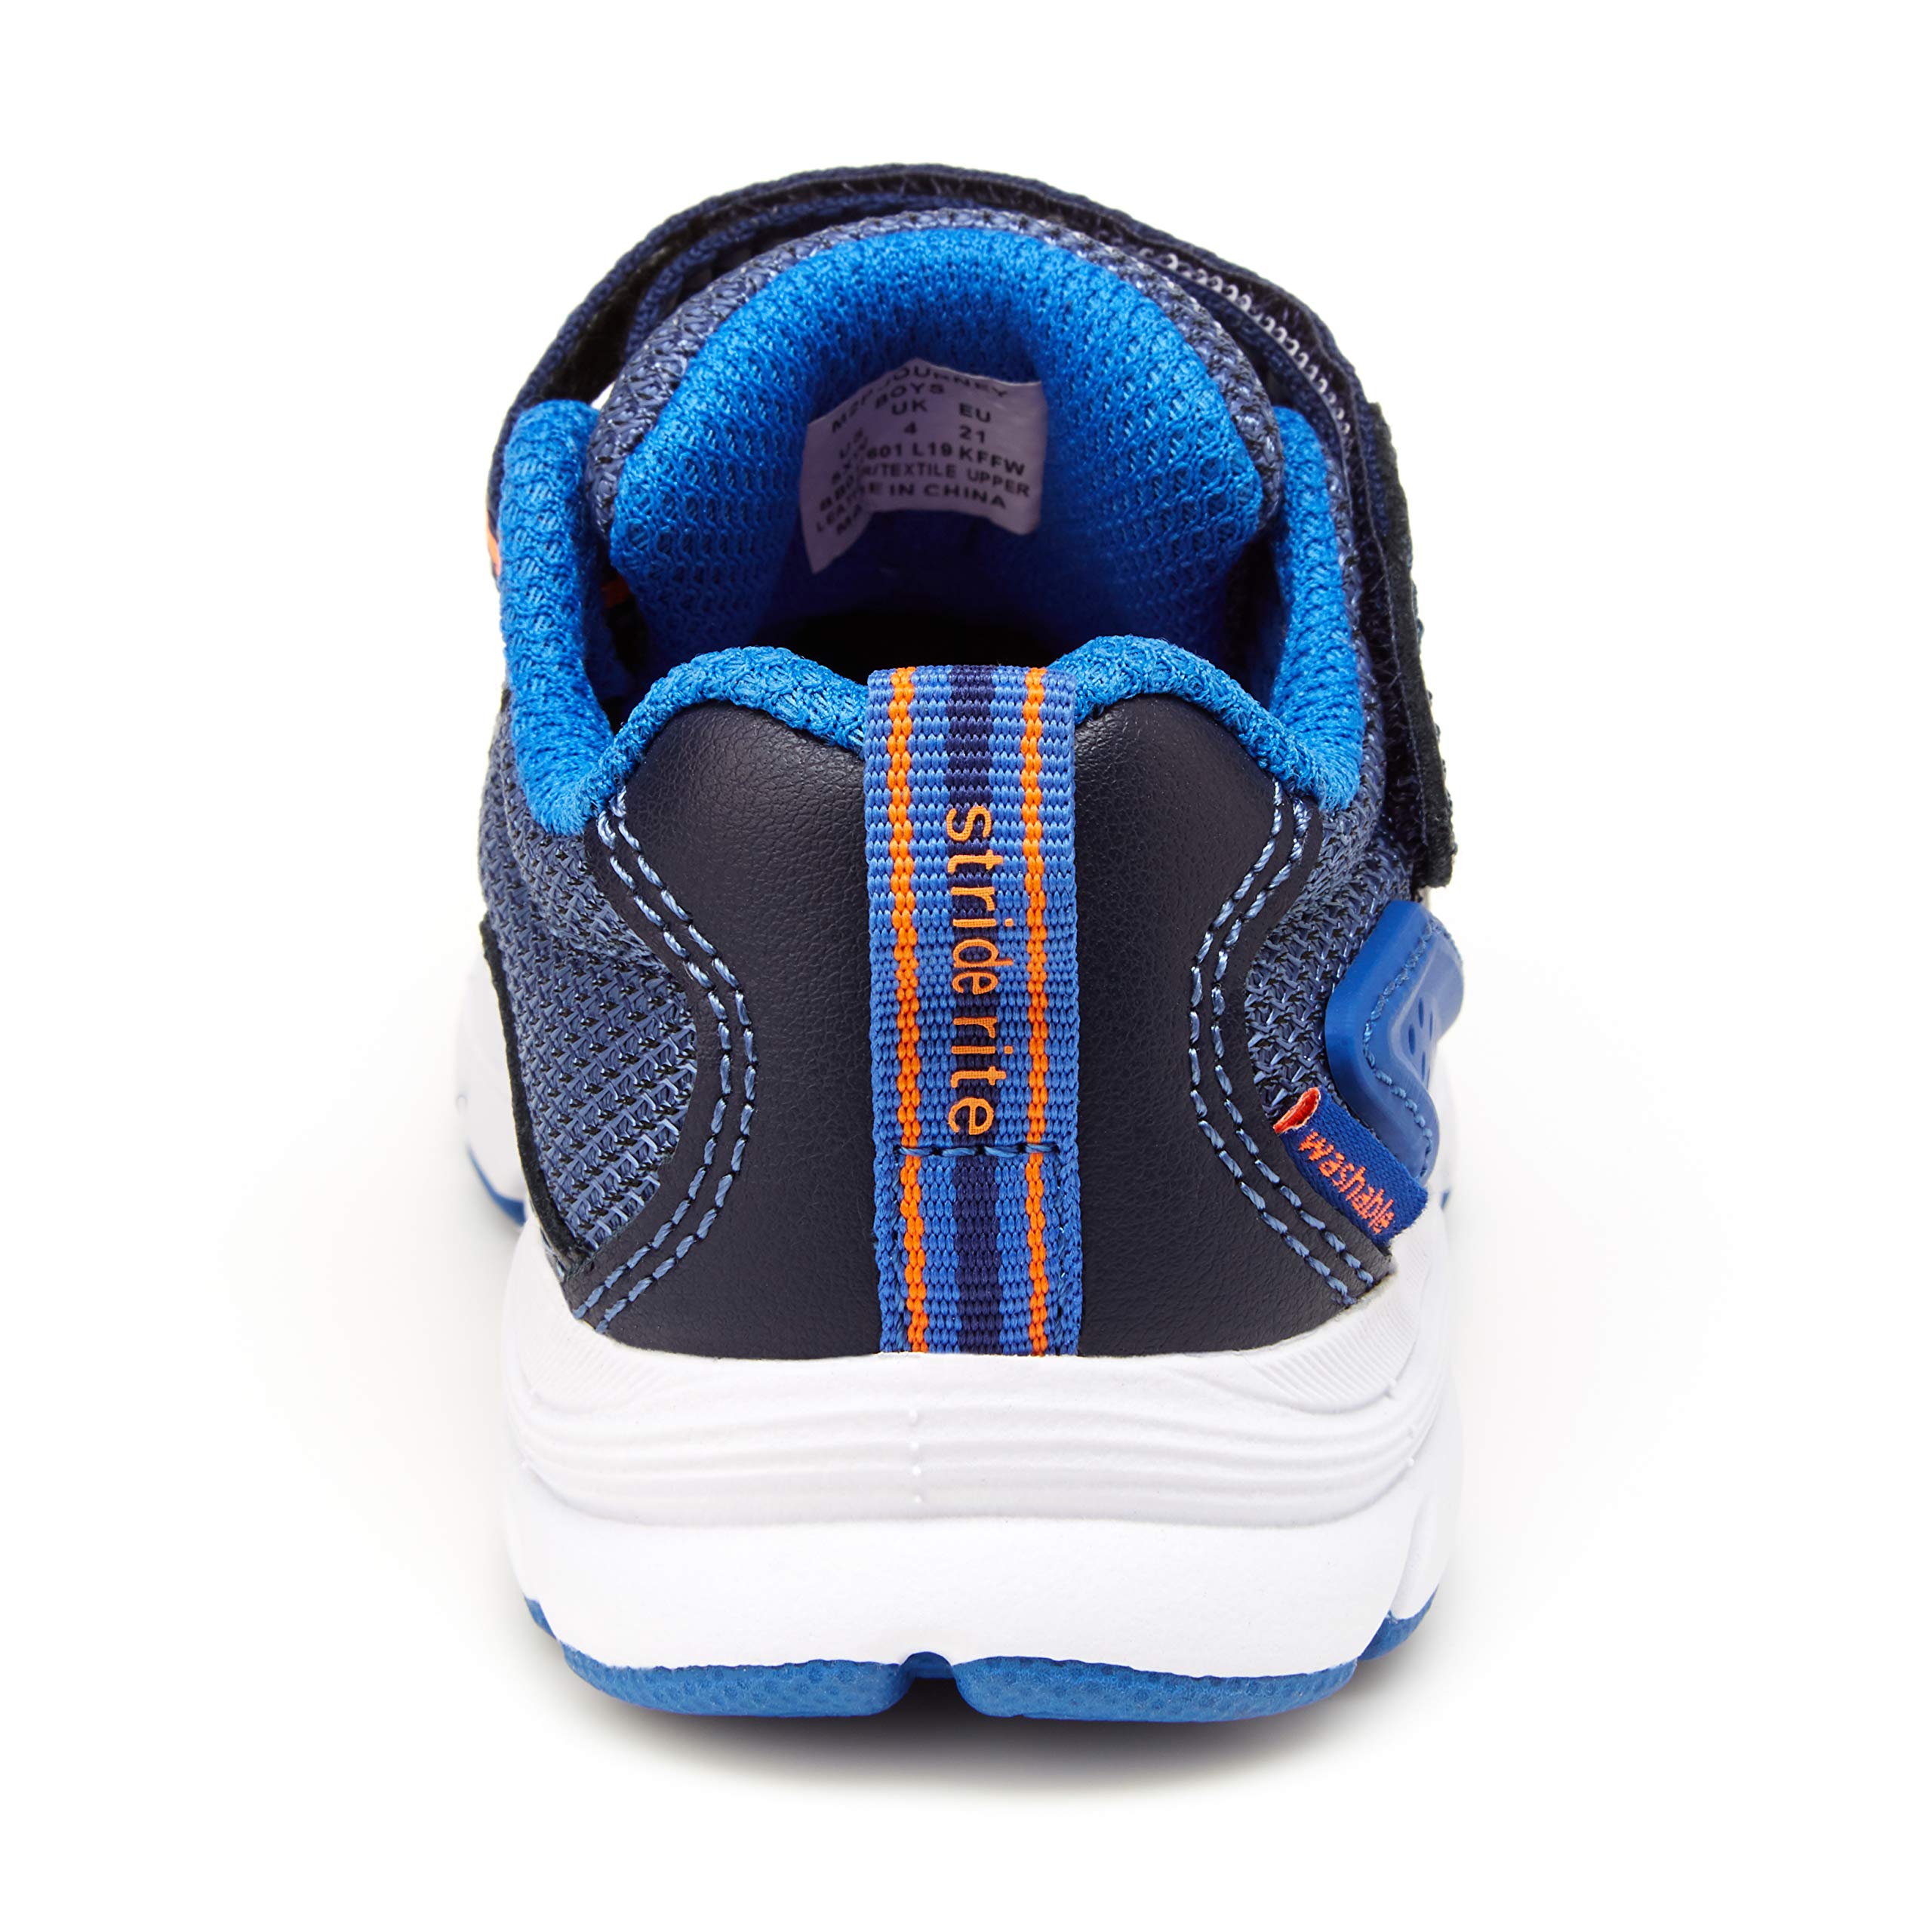 Stride Rite Unisex-Child M2p Journey Athletic Sneaker